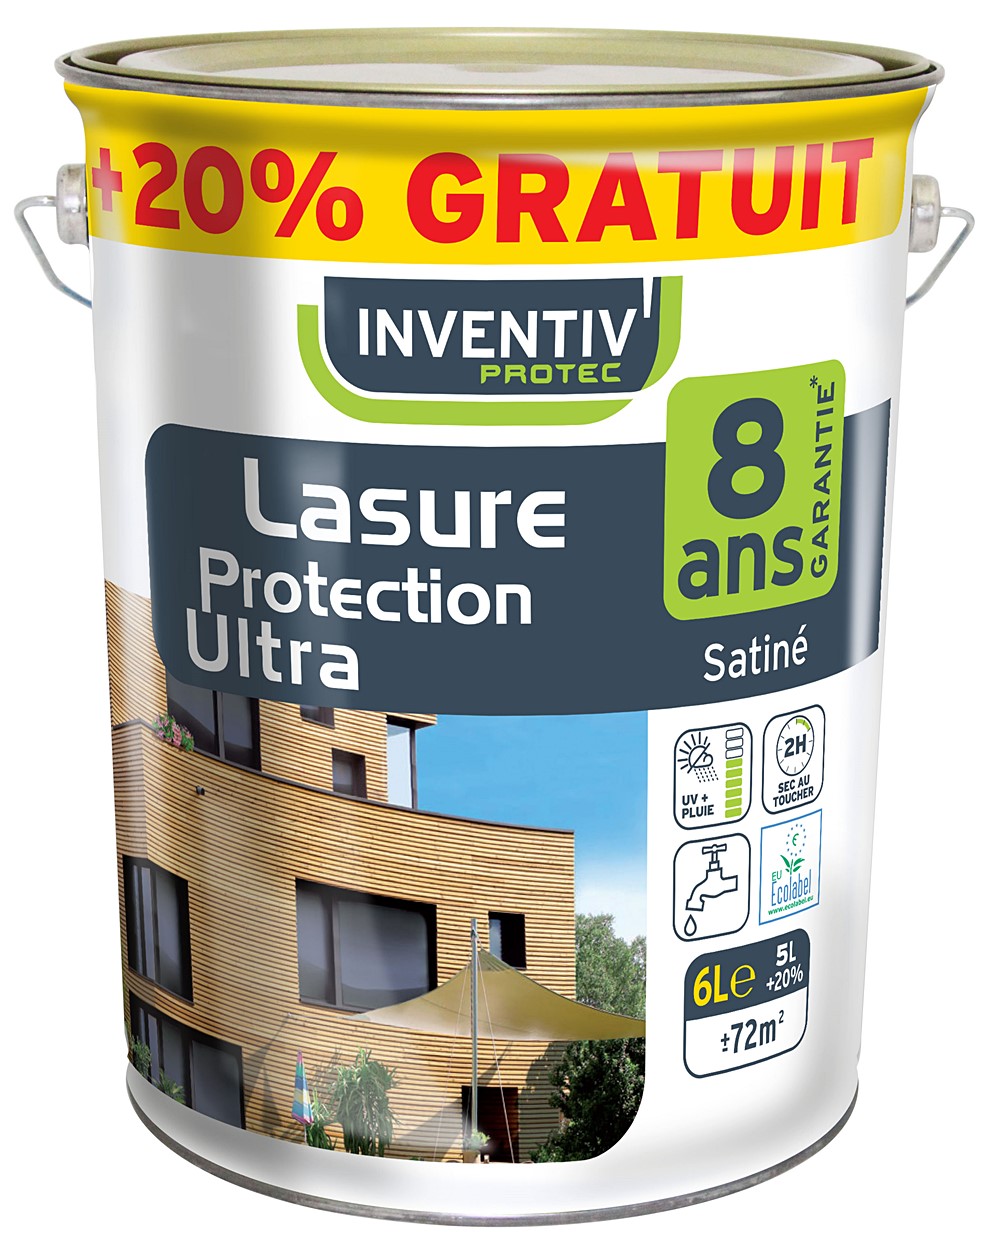 Lasure Protection Ultra 8 ans chêne clair 5L+20% - INVENTIV